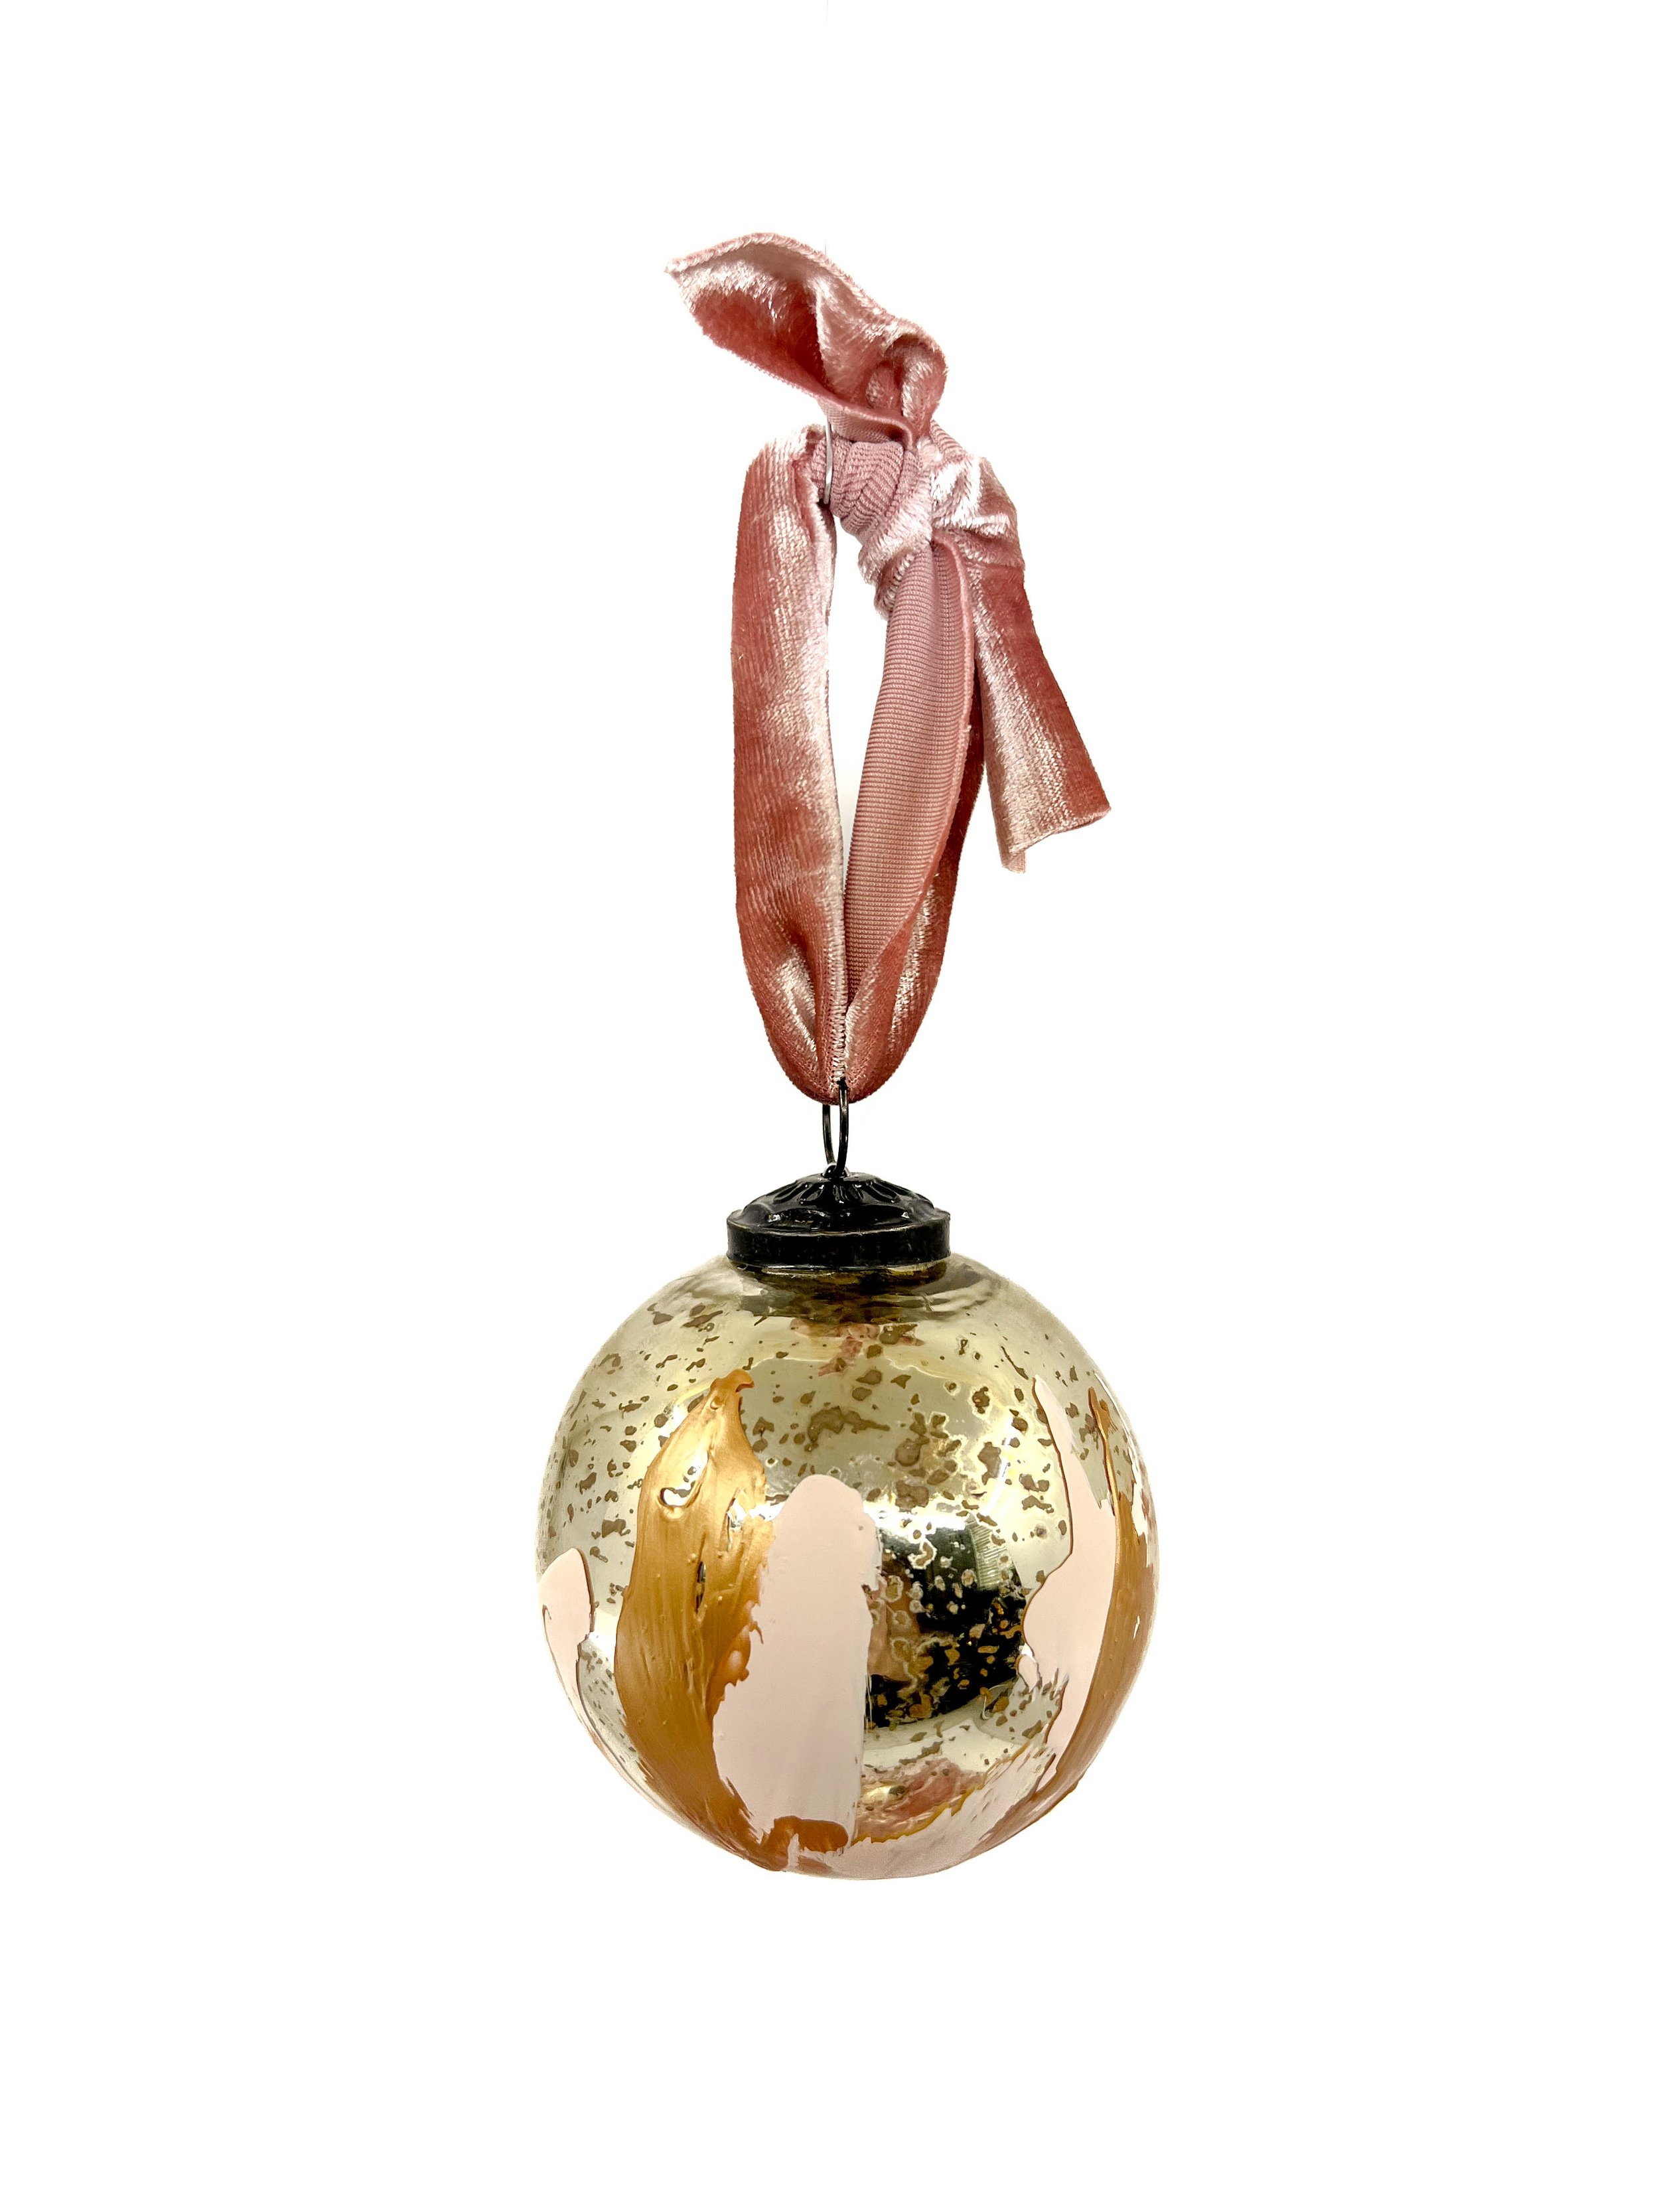 Taylor-black-charleston-artist-holiday-2022-Pink Mimosa-ornament-3.jpg